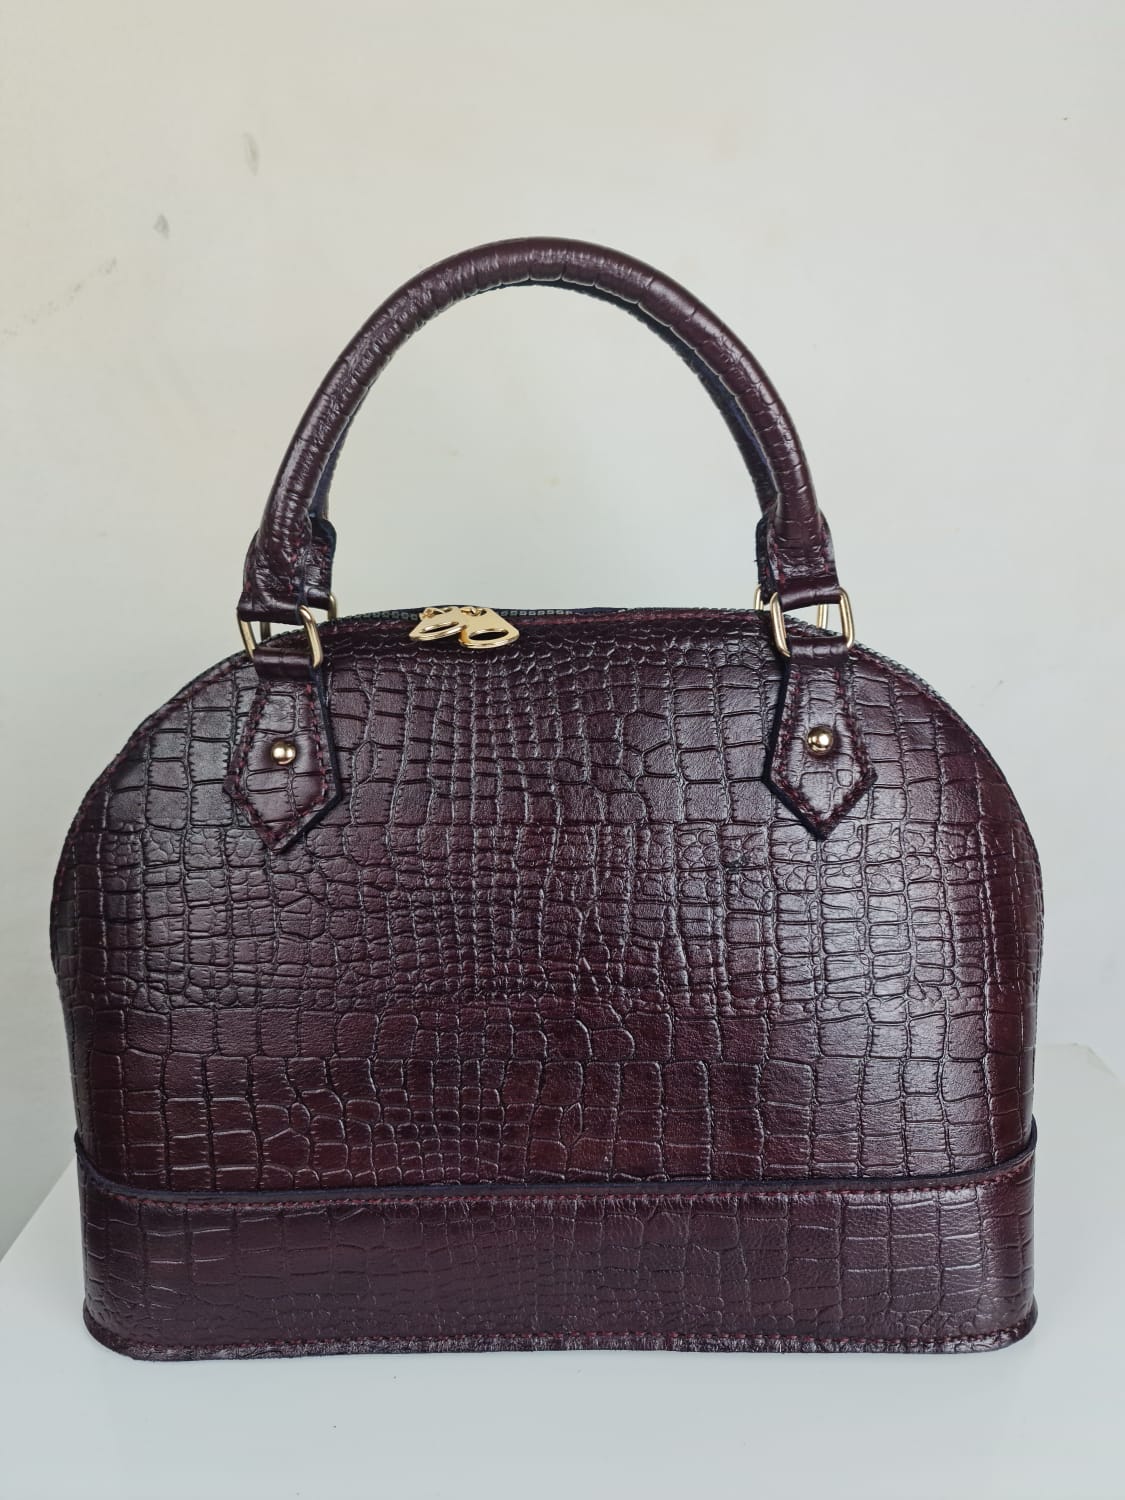 Burgundy genuine leather with snakeskin pattern